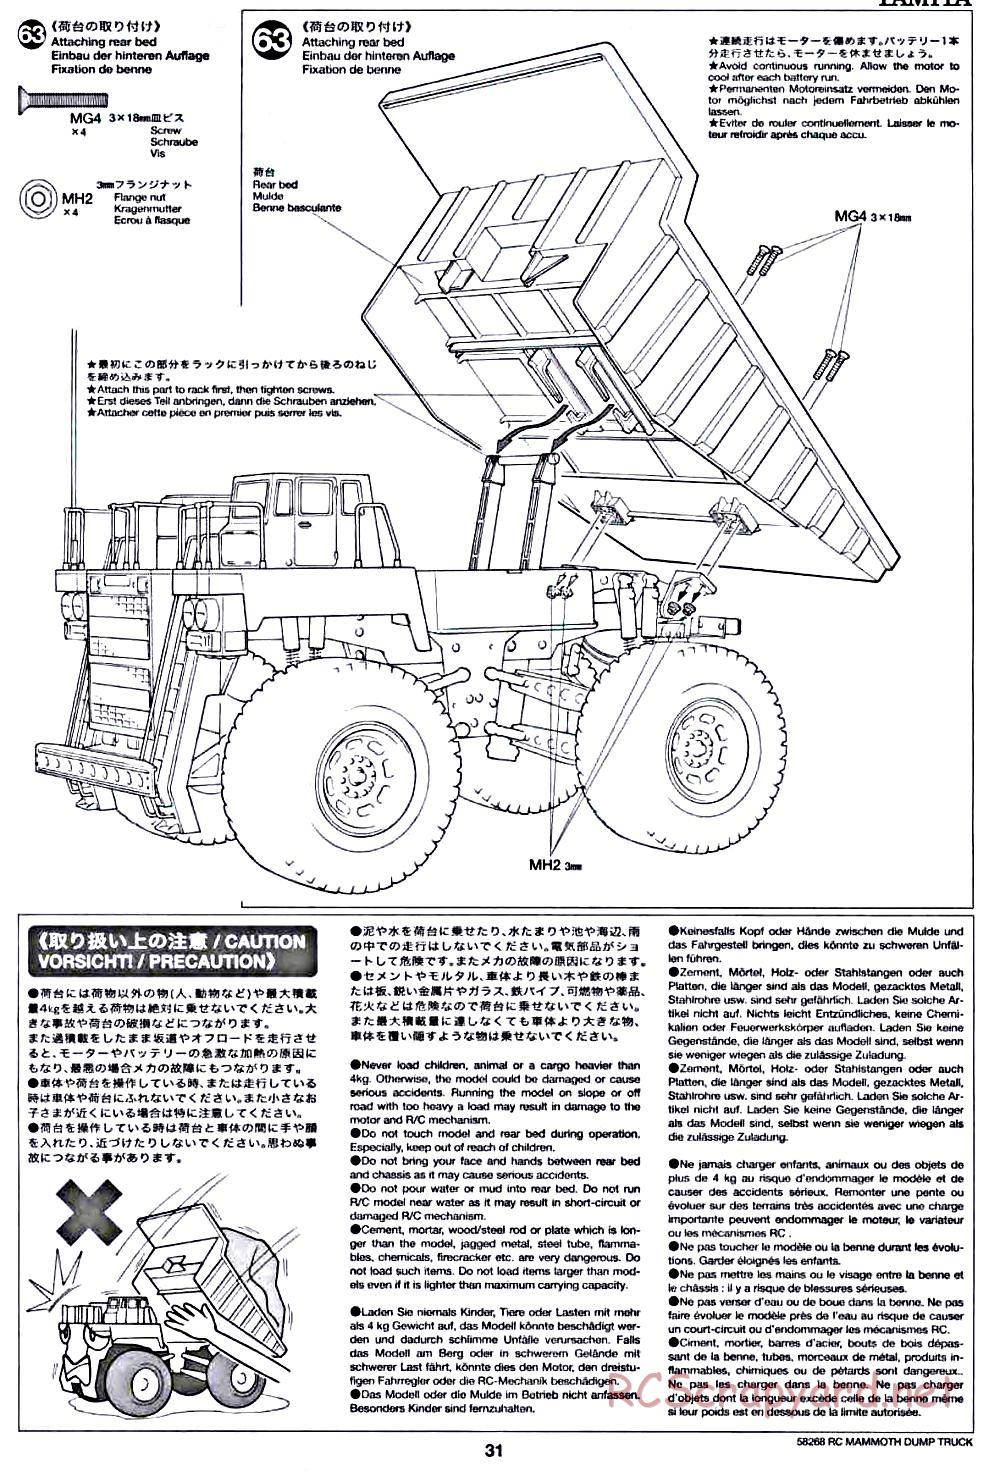 Tamiya - Mammoth Dump Truck Chassis - Manual - Page 31